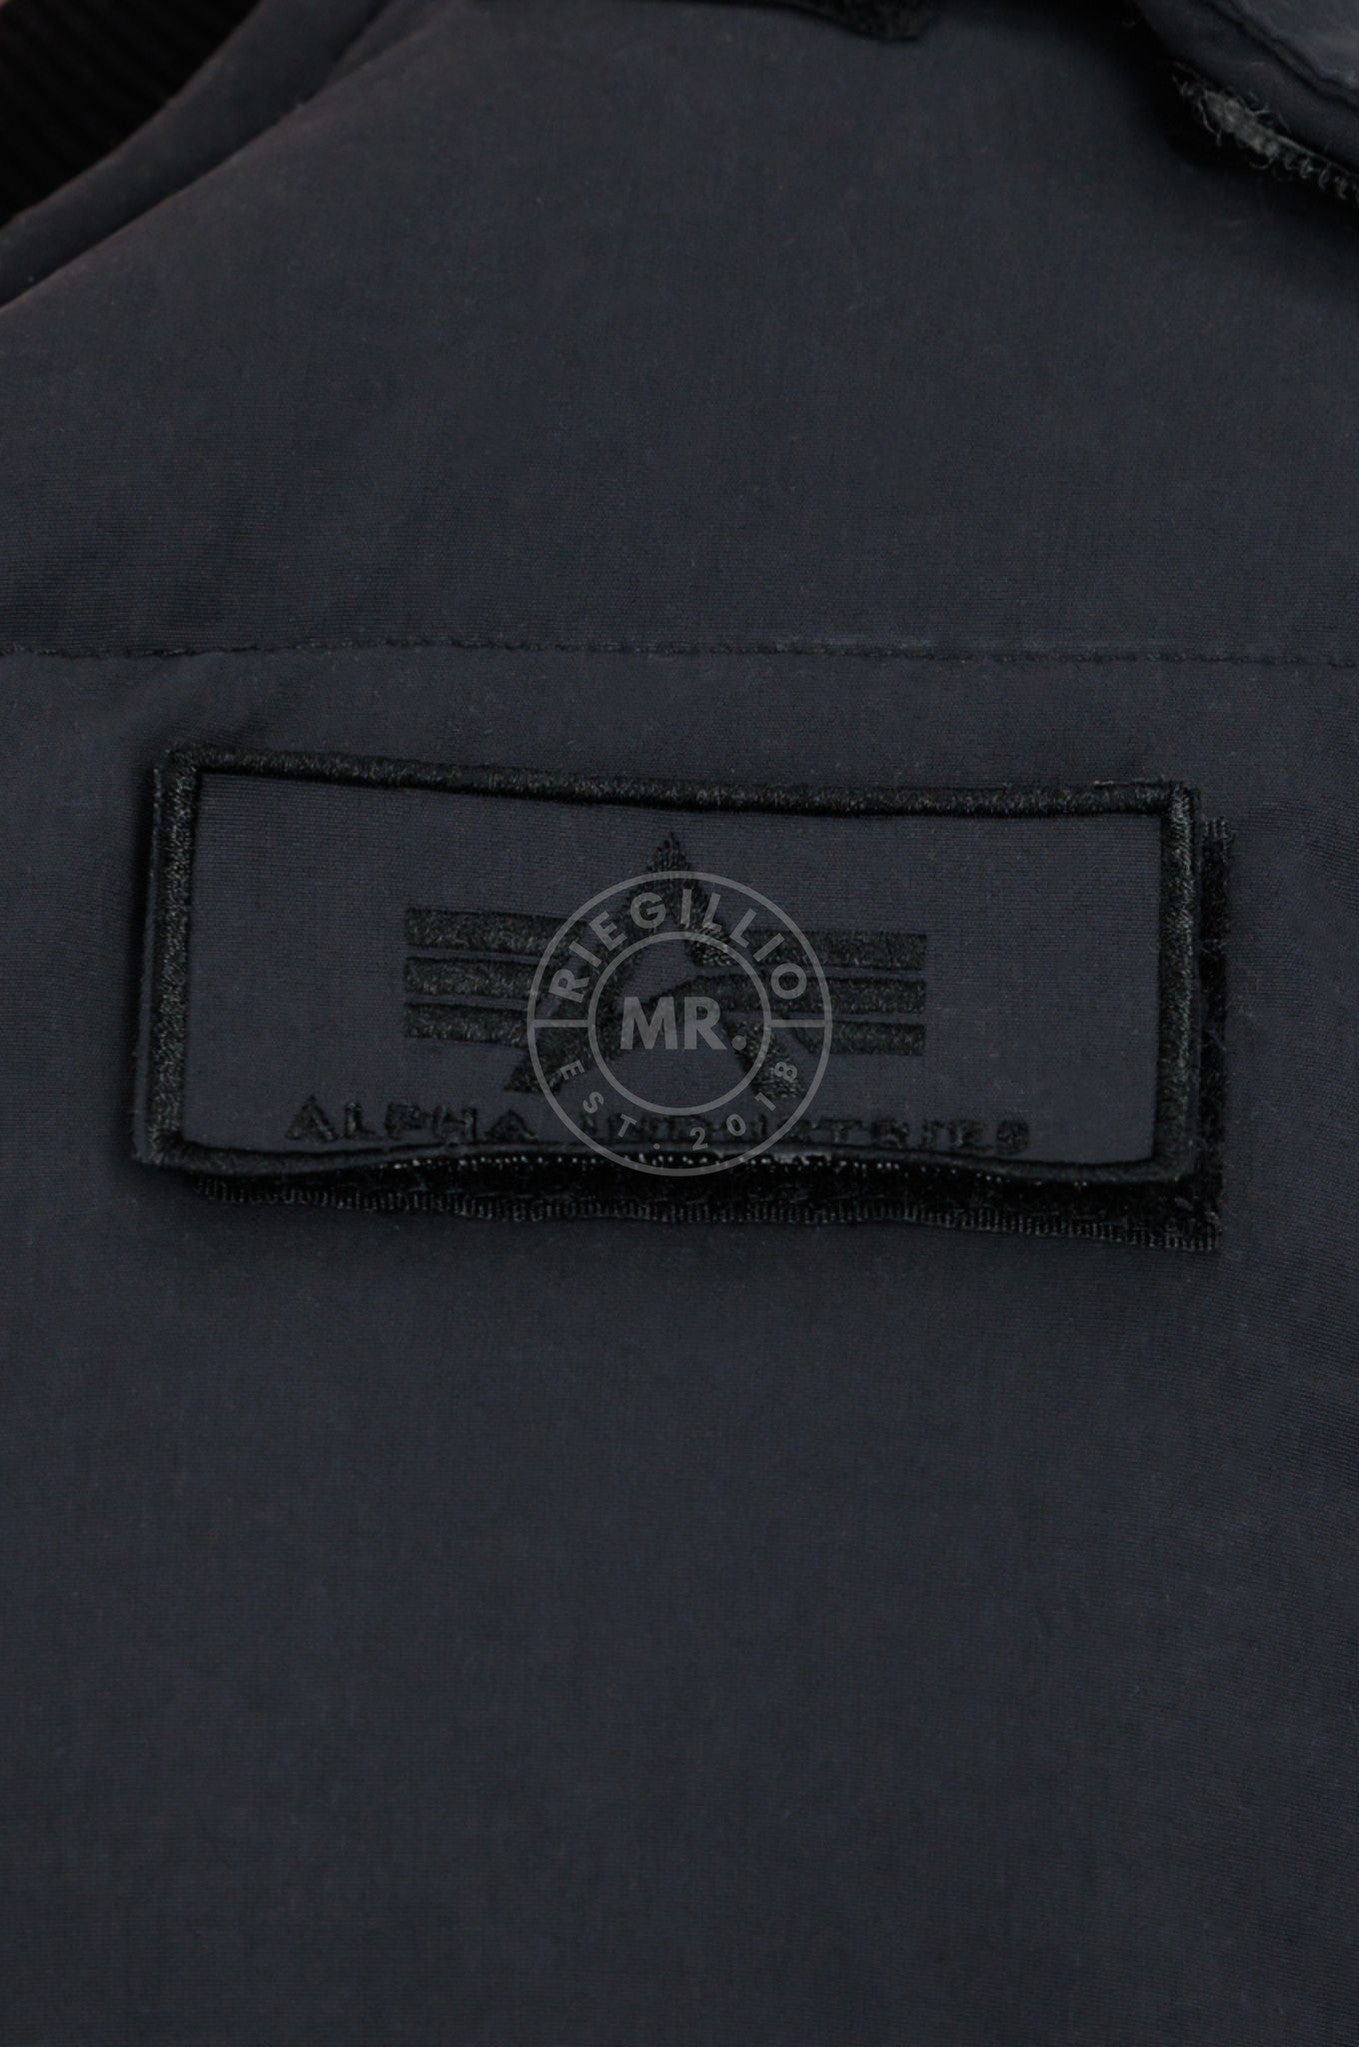 Alpha Industries Protector Puffer Vest - Black at MR. Riegillio